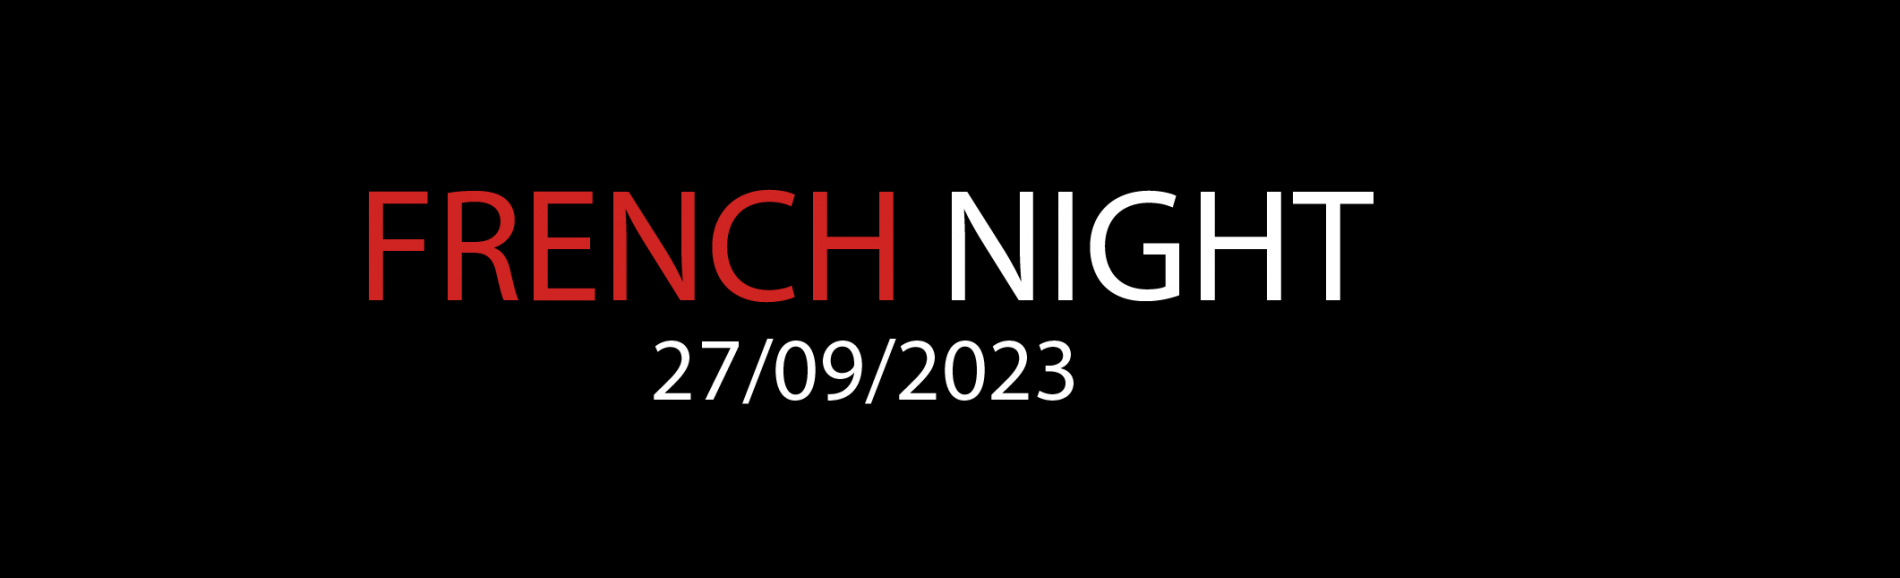 FRENCH NIGHT - 27/09/2023